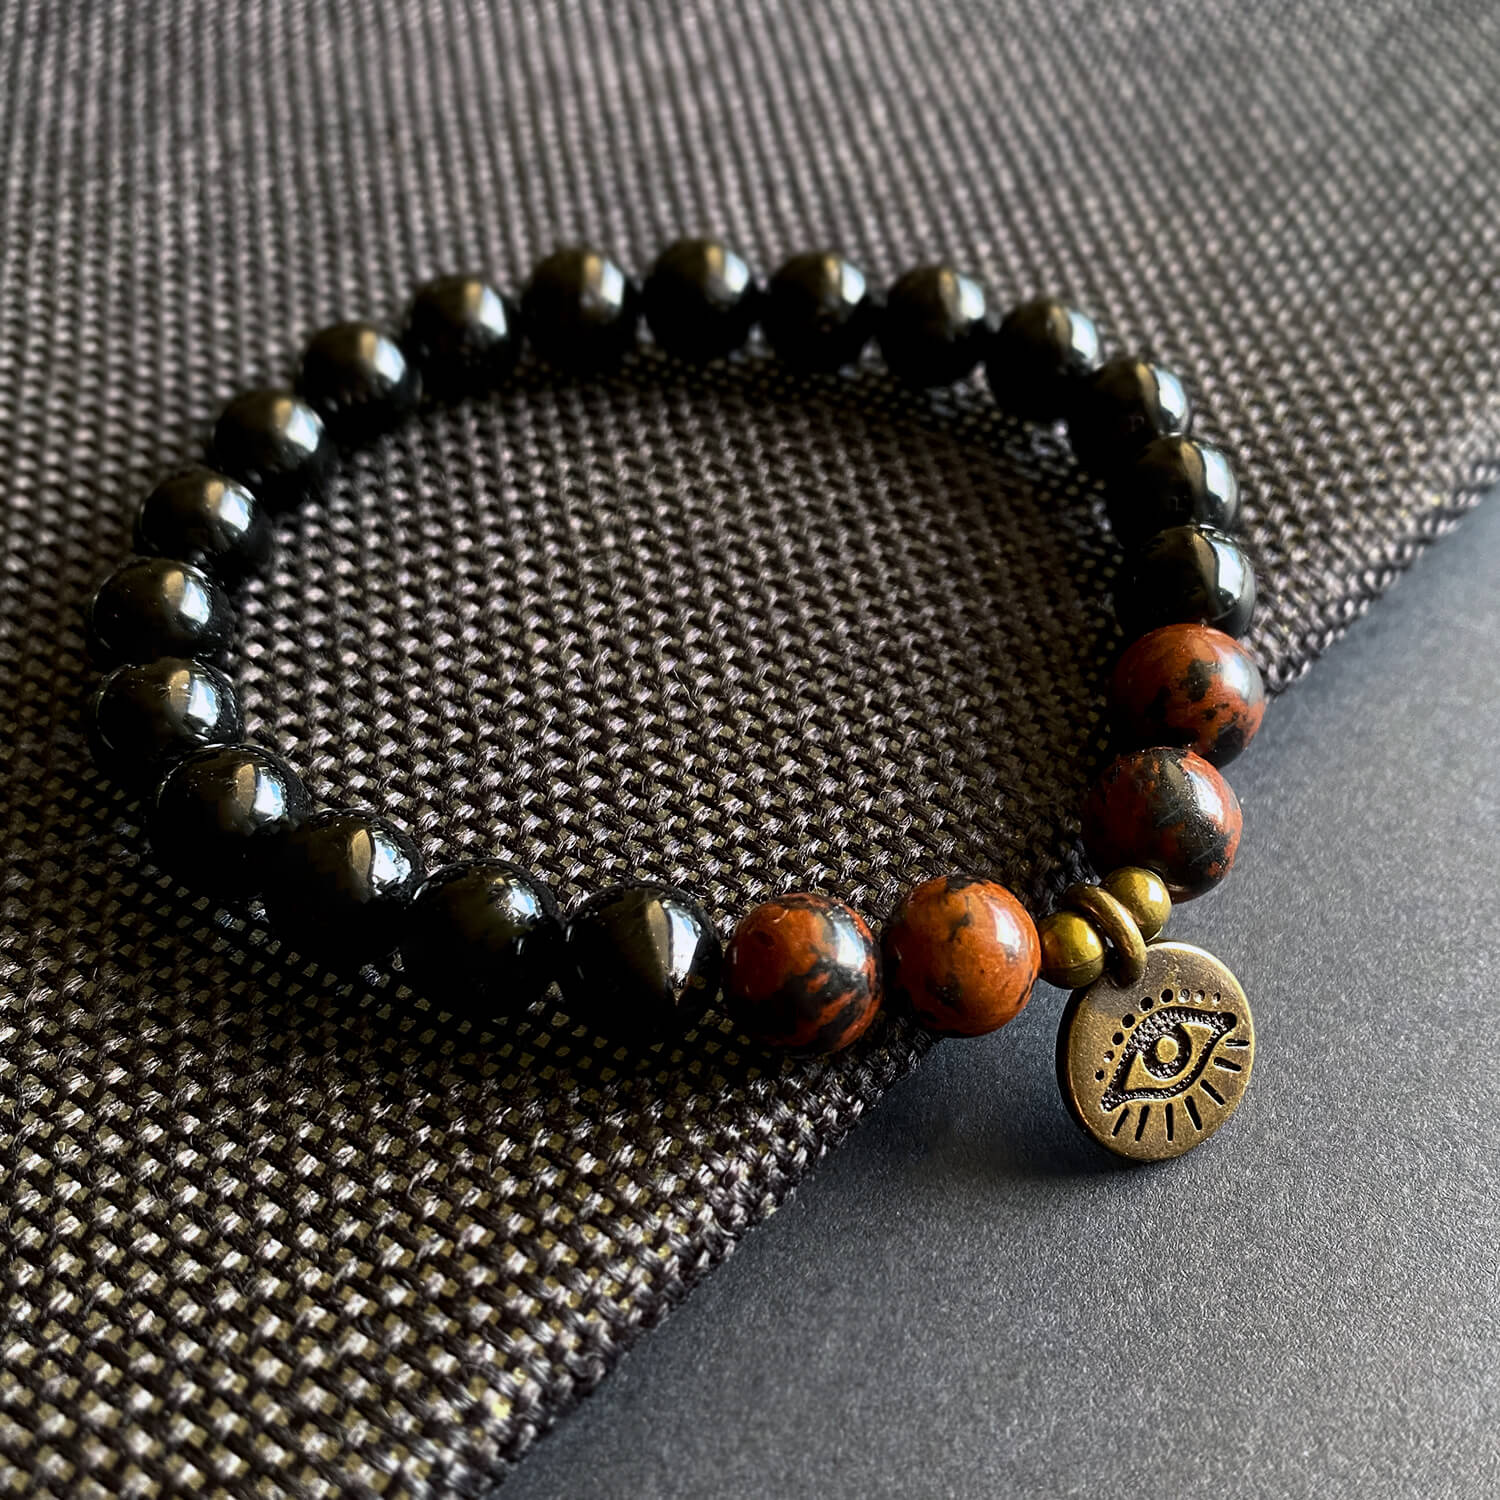 Black Tourmaline crystal bead bracelet. CRYSTALS.COM